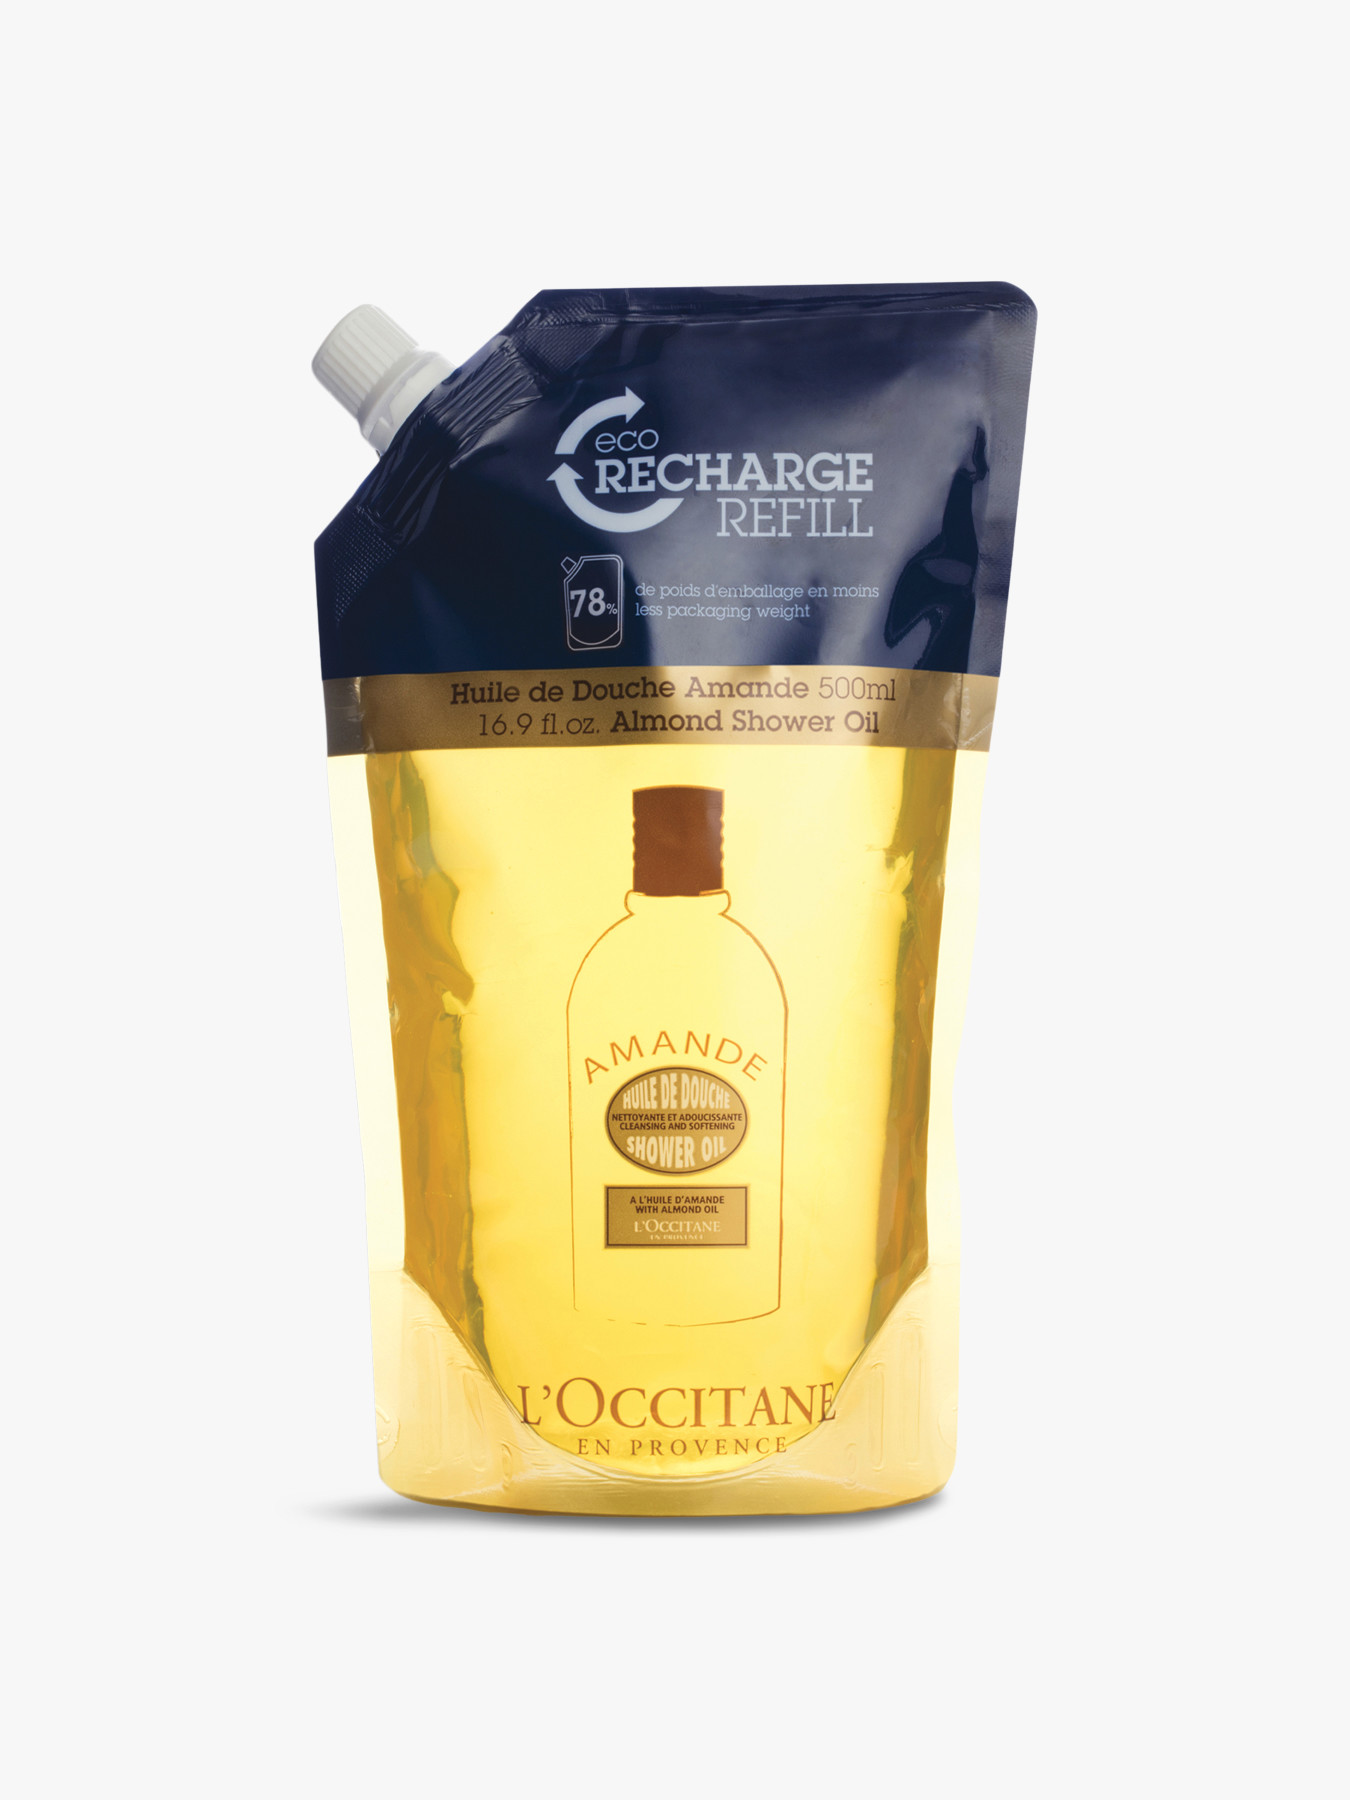 L'occitane Almond Shower Oil Refill 500ml